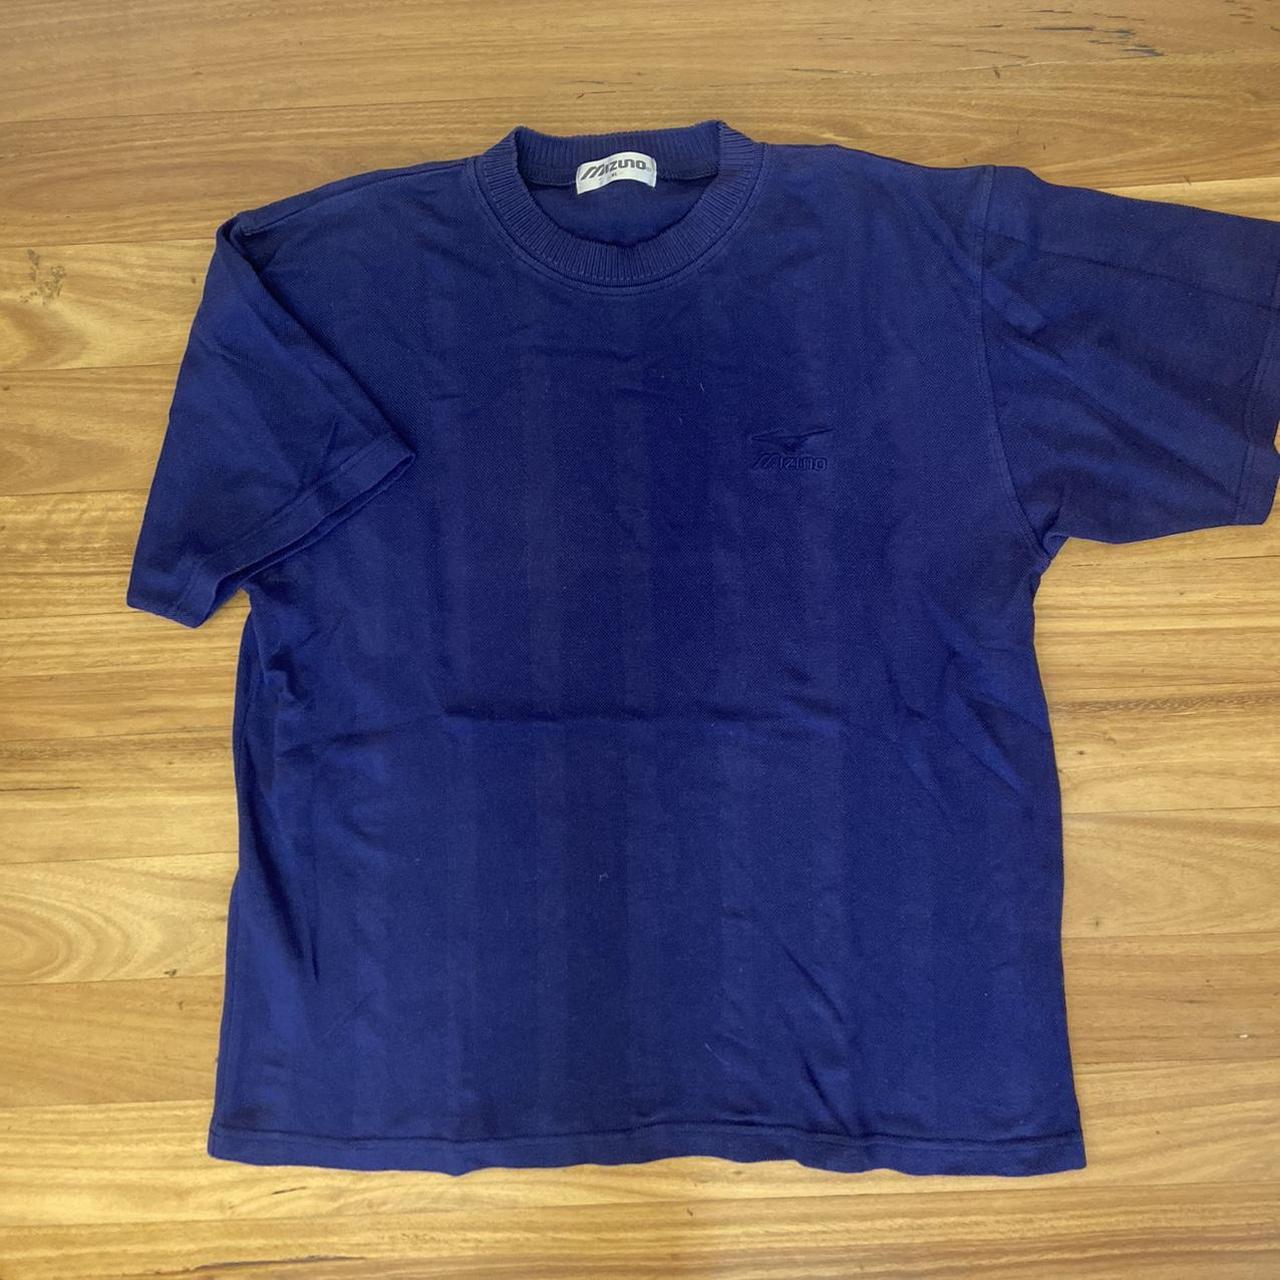 Vintage 90s mizuno navy blue t shirt tennis top... - Depop